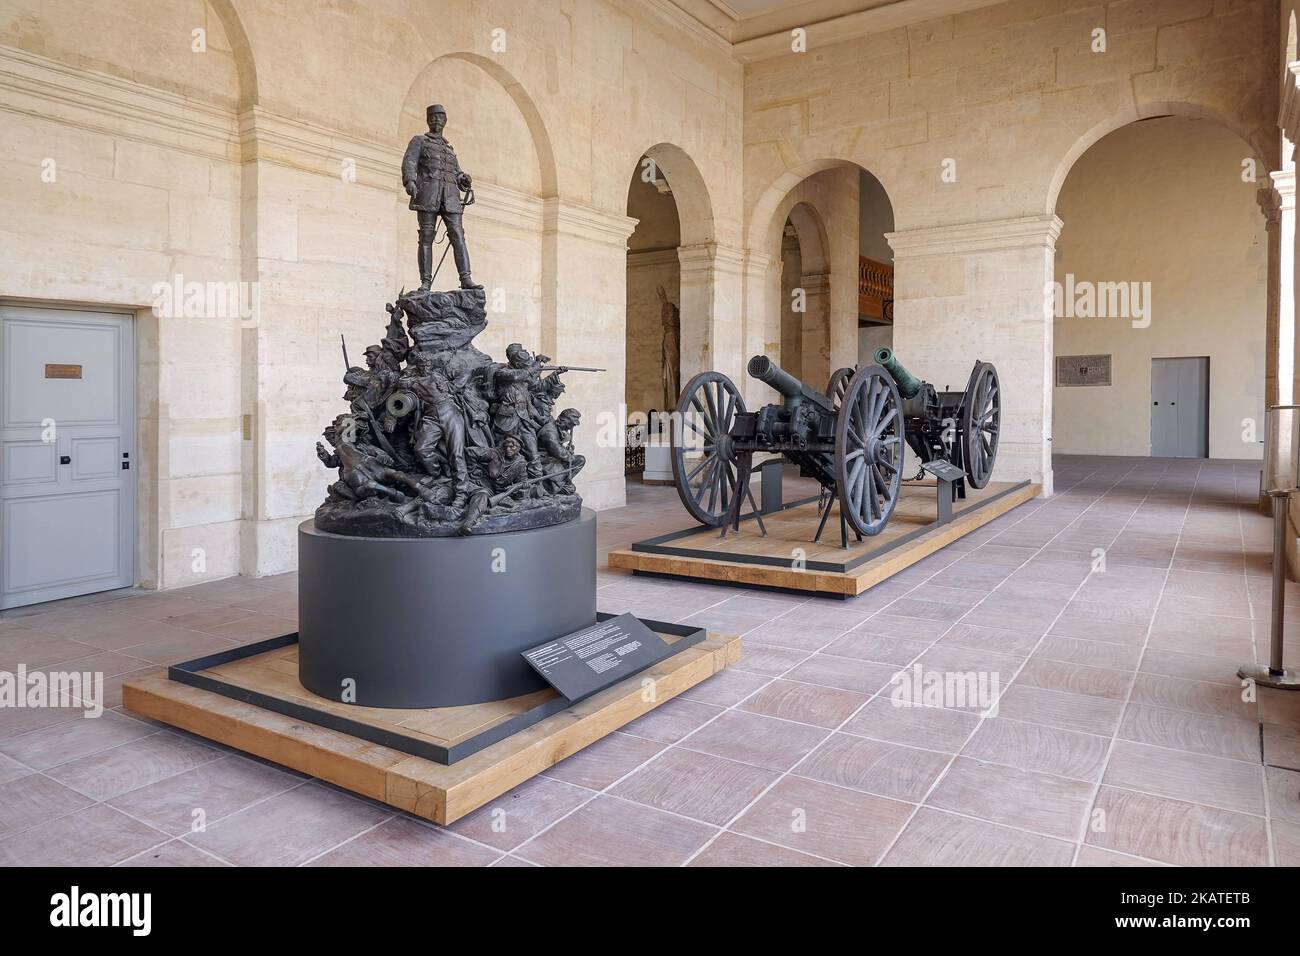 France, Paris, Hotel des Invalides, The Musee de l'Armee (Army Museum) national military museum of France   Photo © Fabio Mazzarella/Sintesi/Alamy Sto Stock Photo